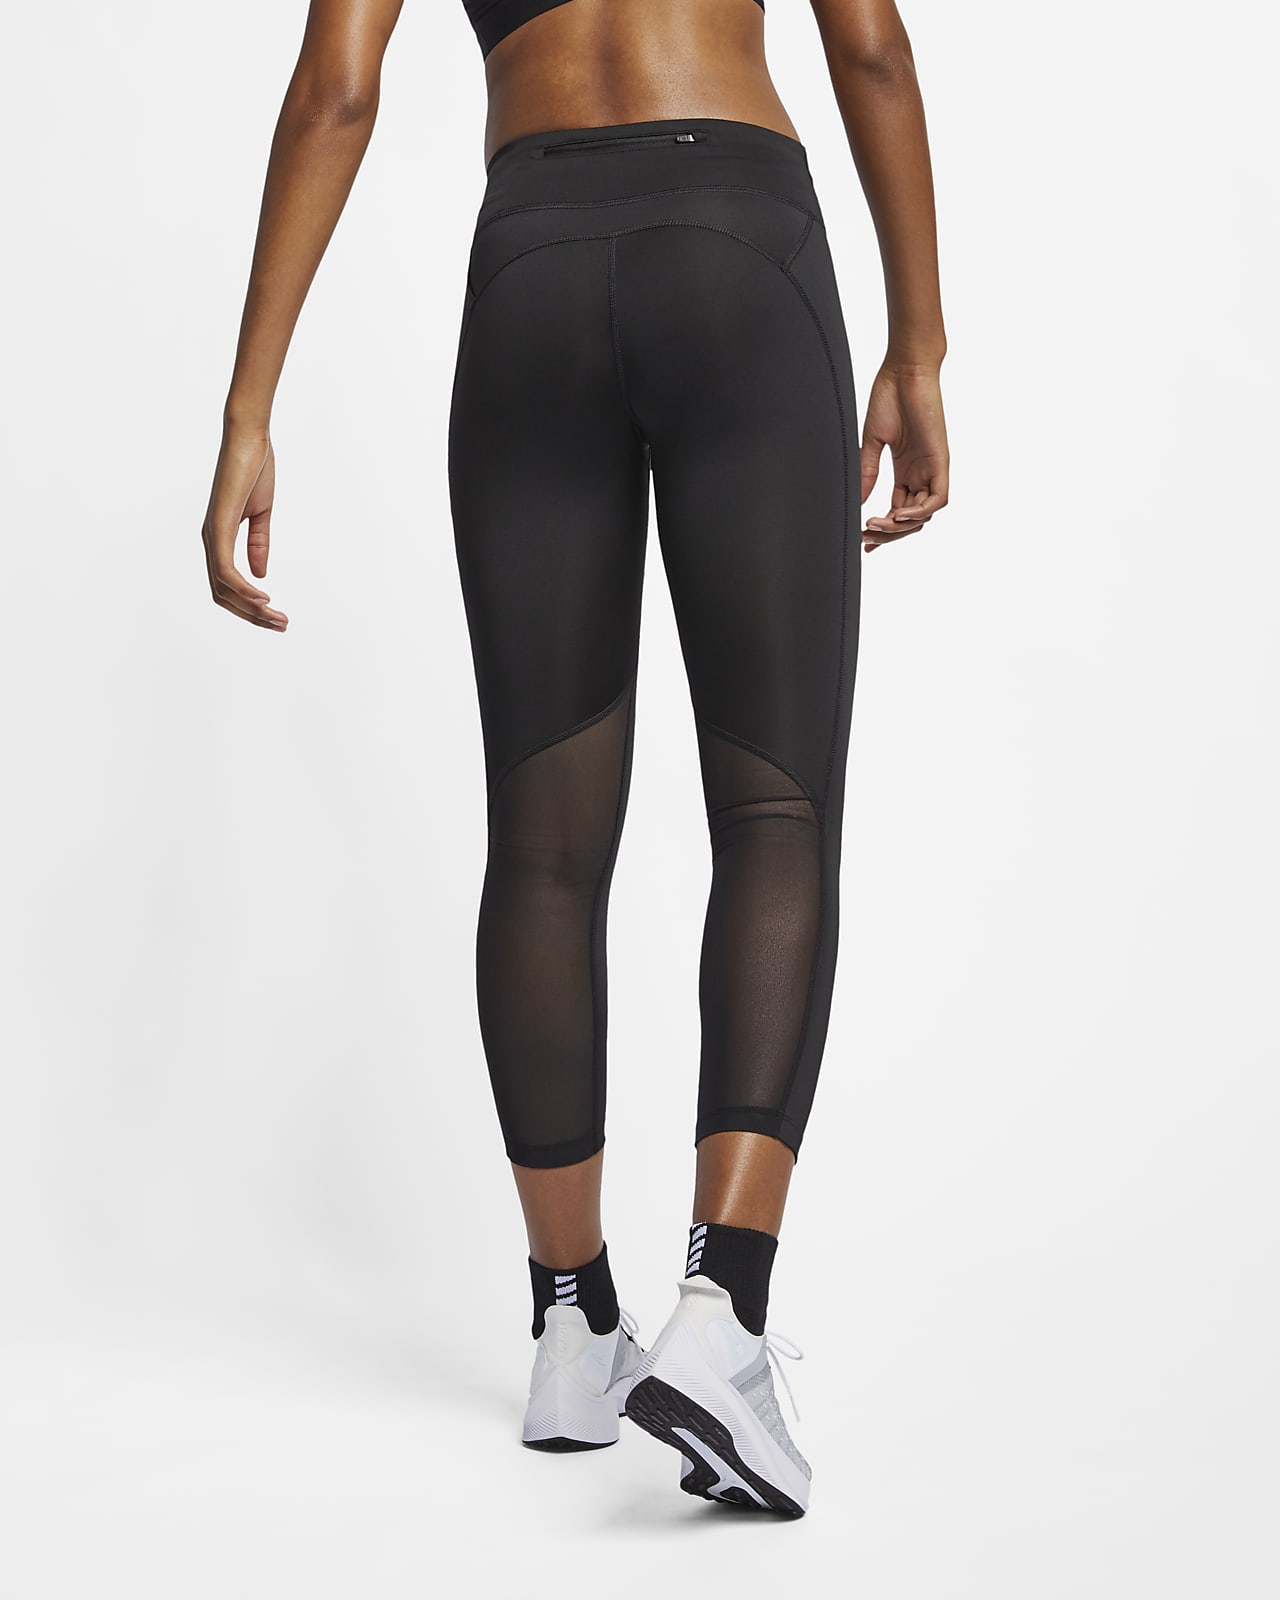 Nylon meerderheid hun Nike Fast Women's Mid-Rise Crop Running Leggings. Nike SI